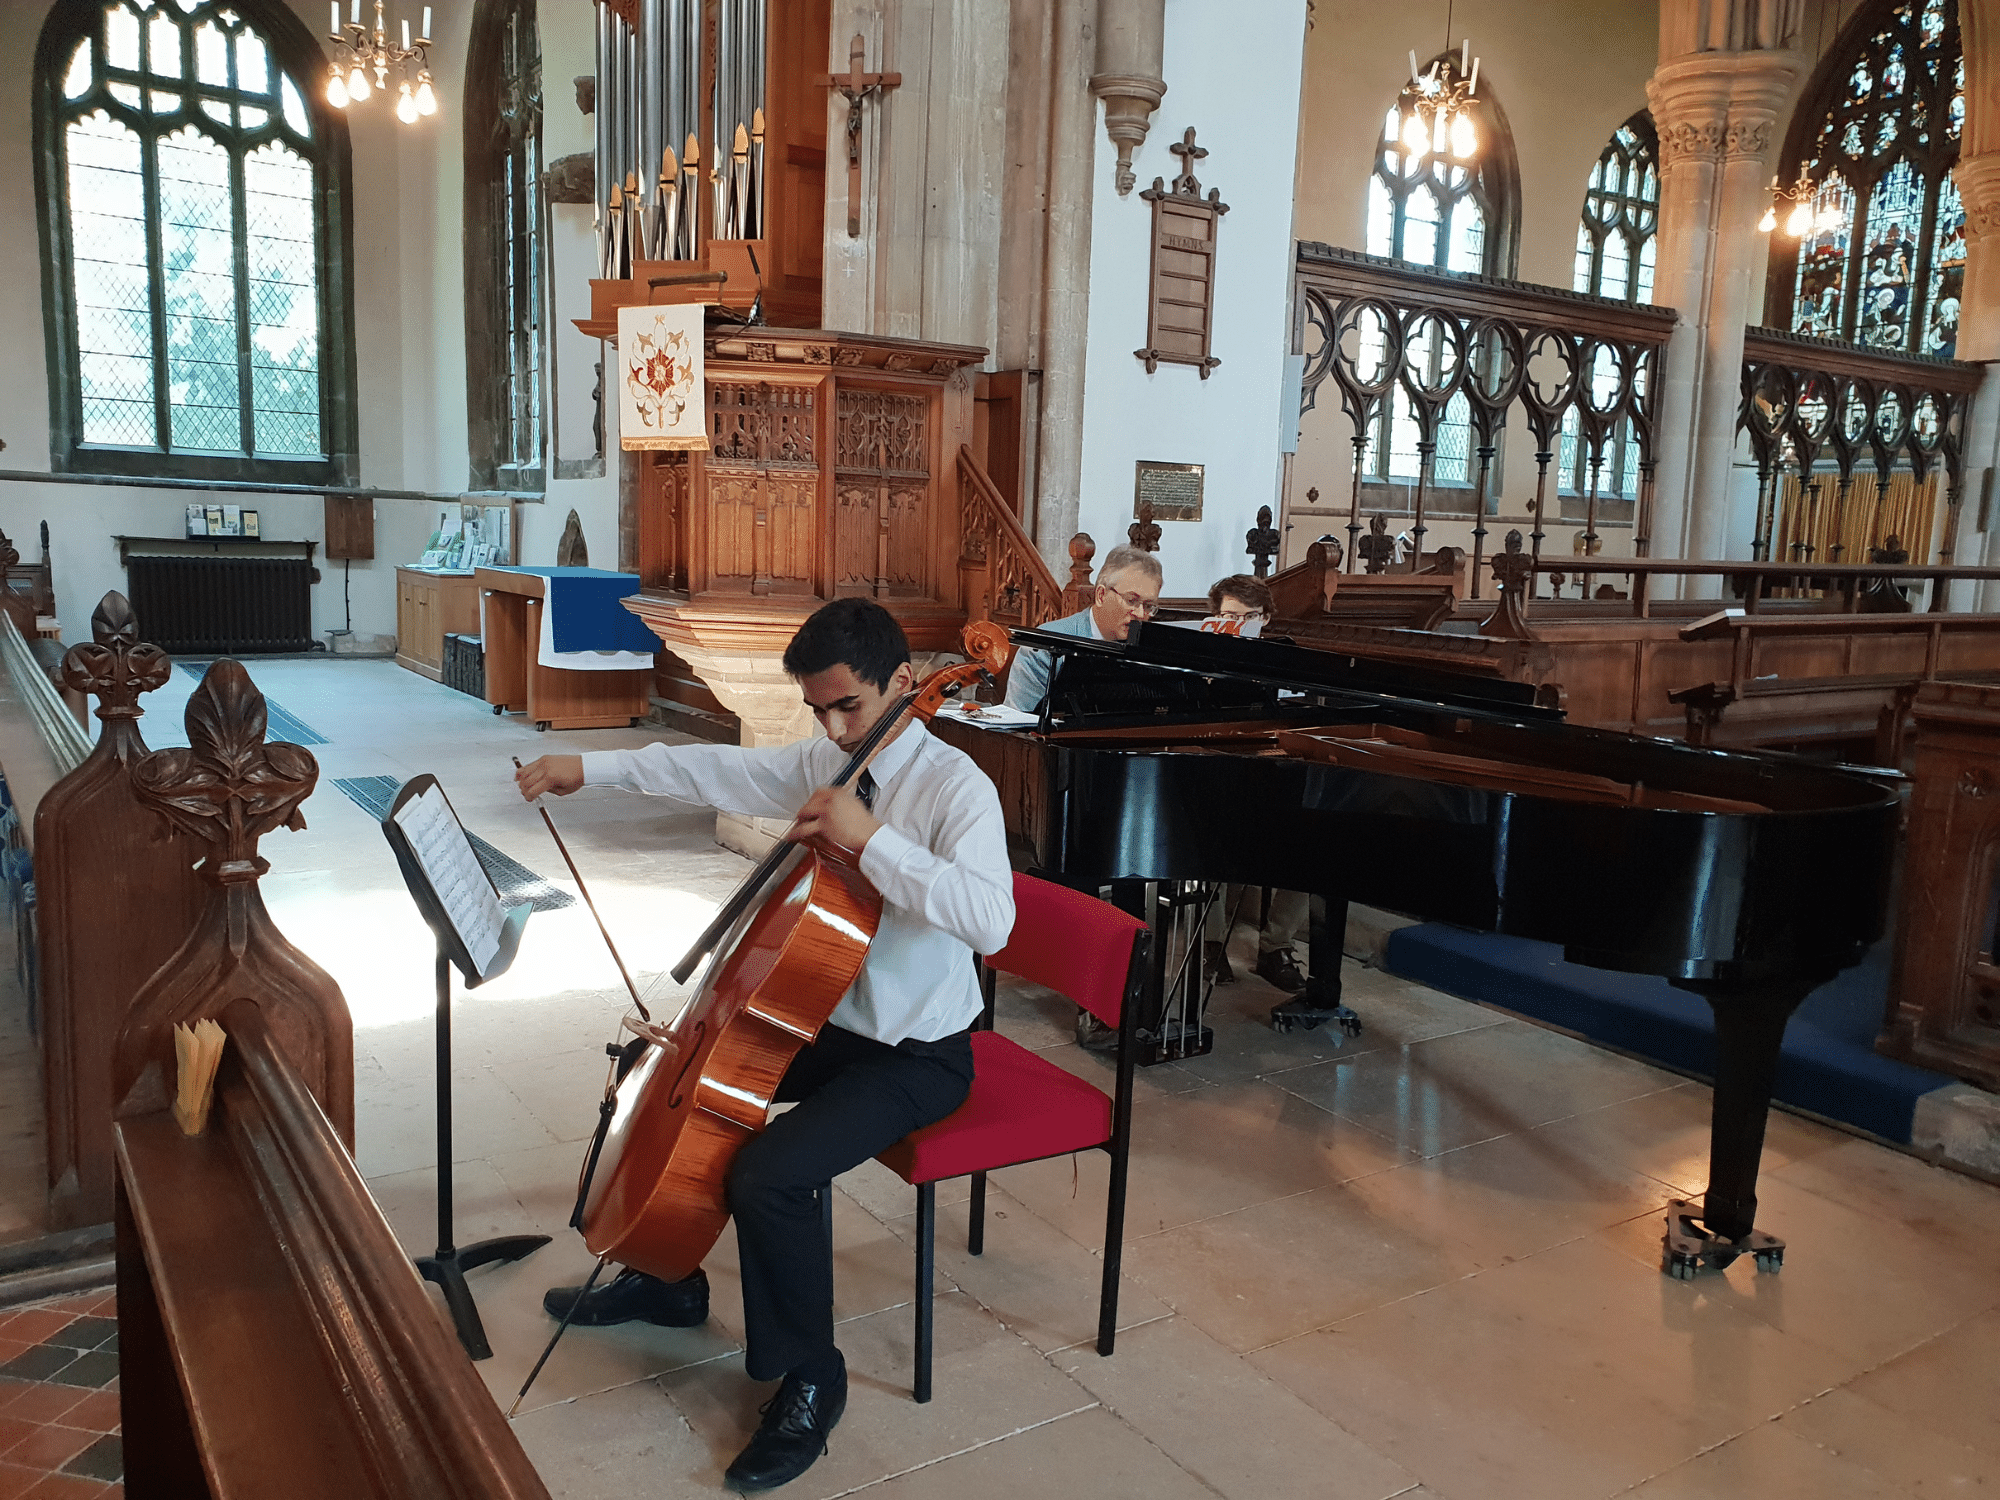 Student plays the cello in school recital in church